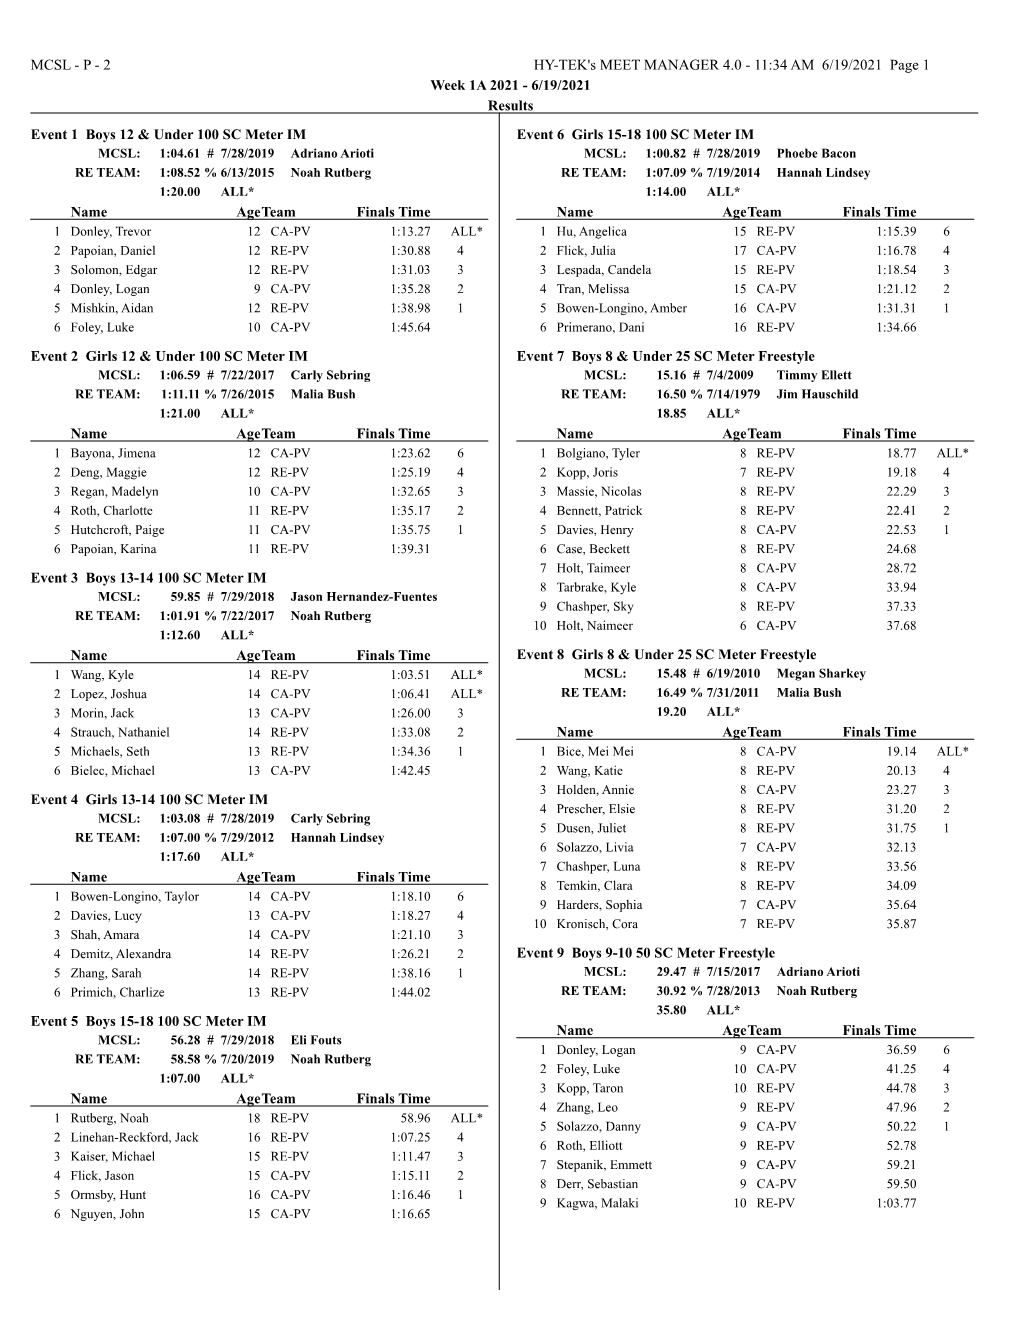 6/19/2021 Results Event 1 Boys 12 & Under 100 SC Meter IM